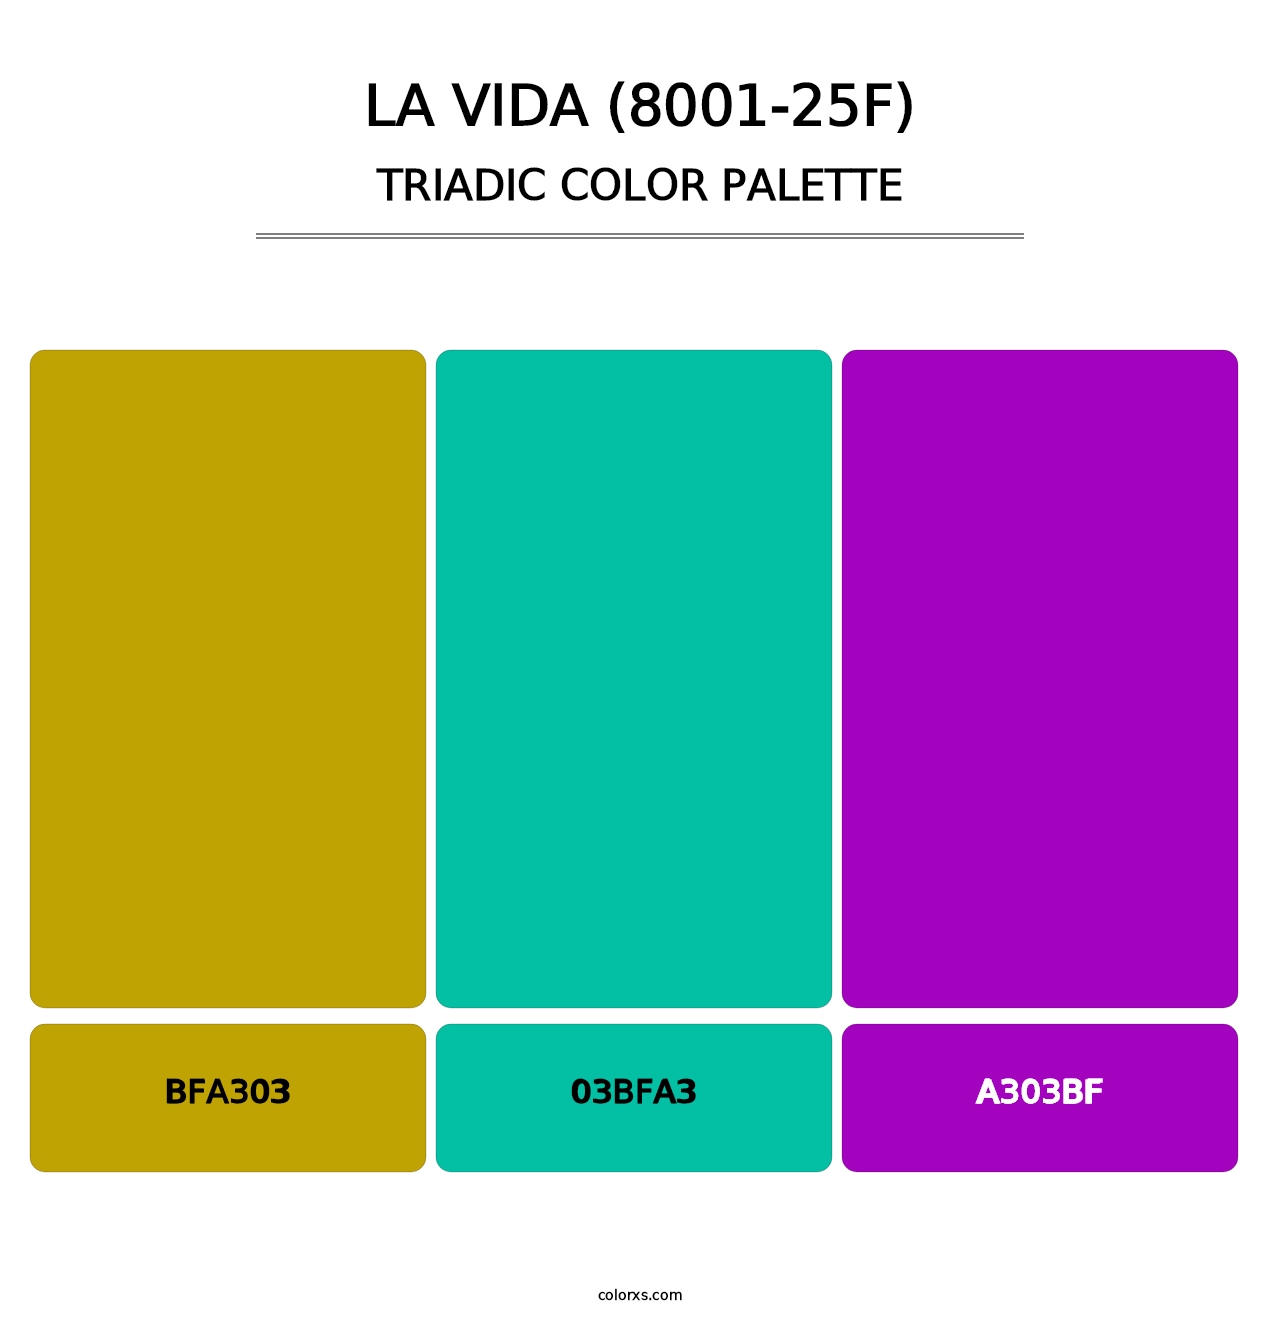 La Vida (8001-25F) - Triadic Color Palette